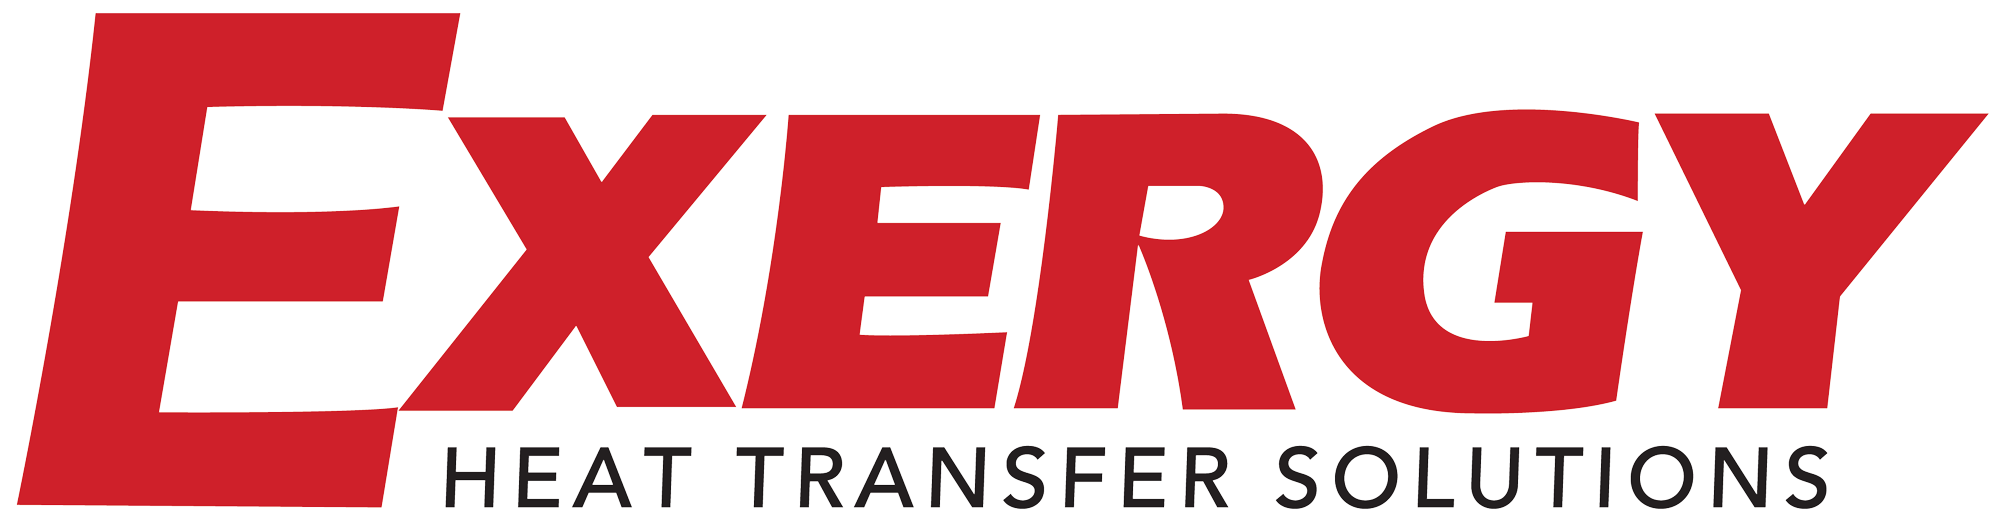 Exergy heat transfer solutions logo